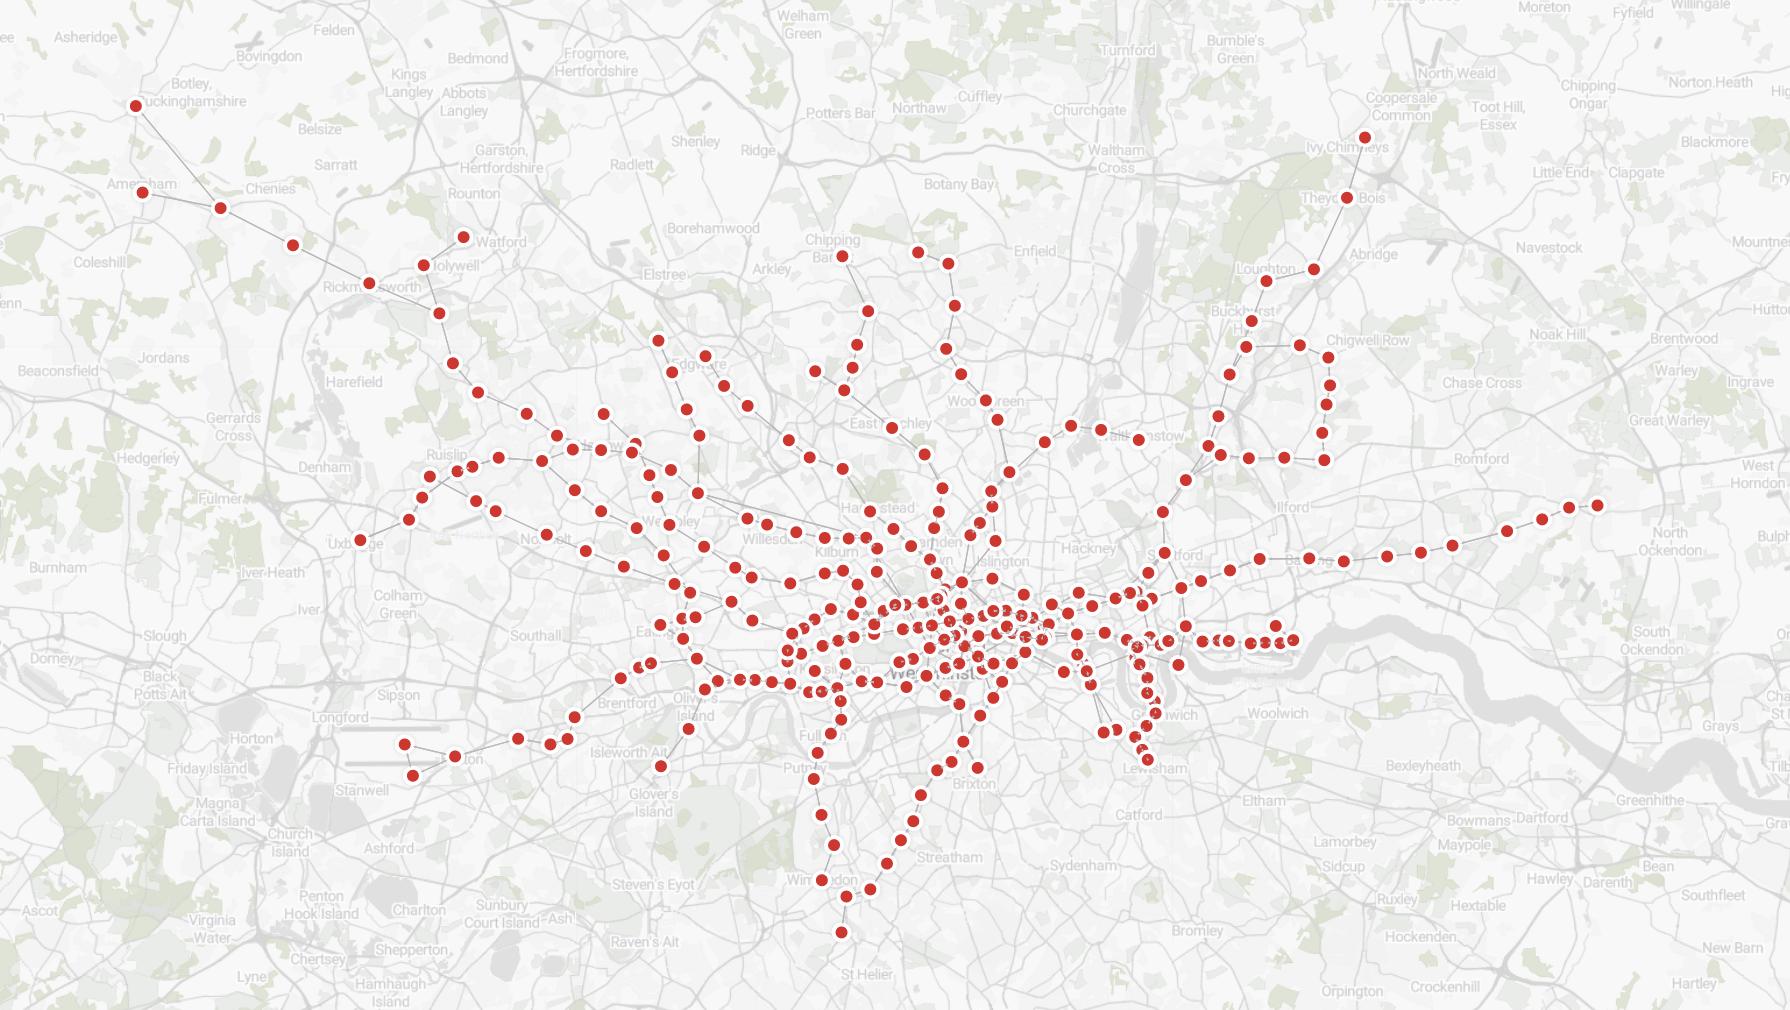 London underground memgraph lab data visualization default style